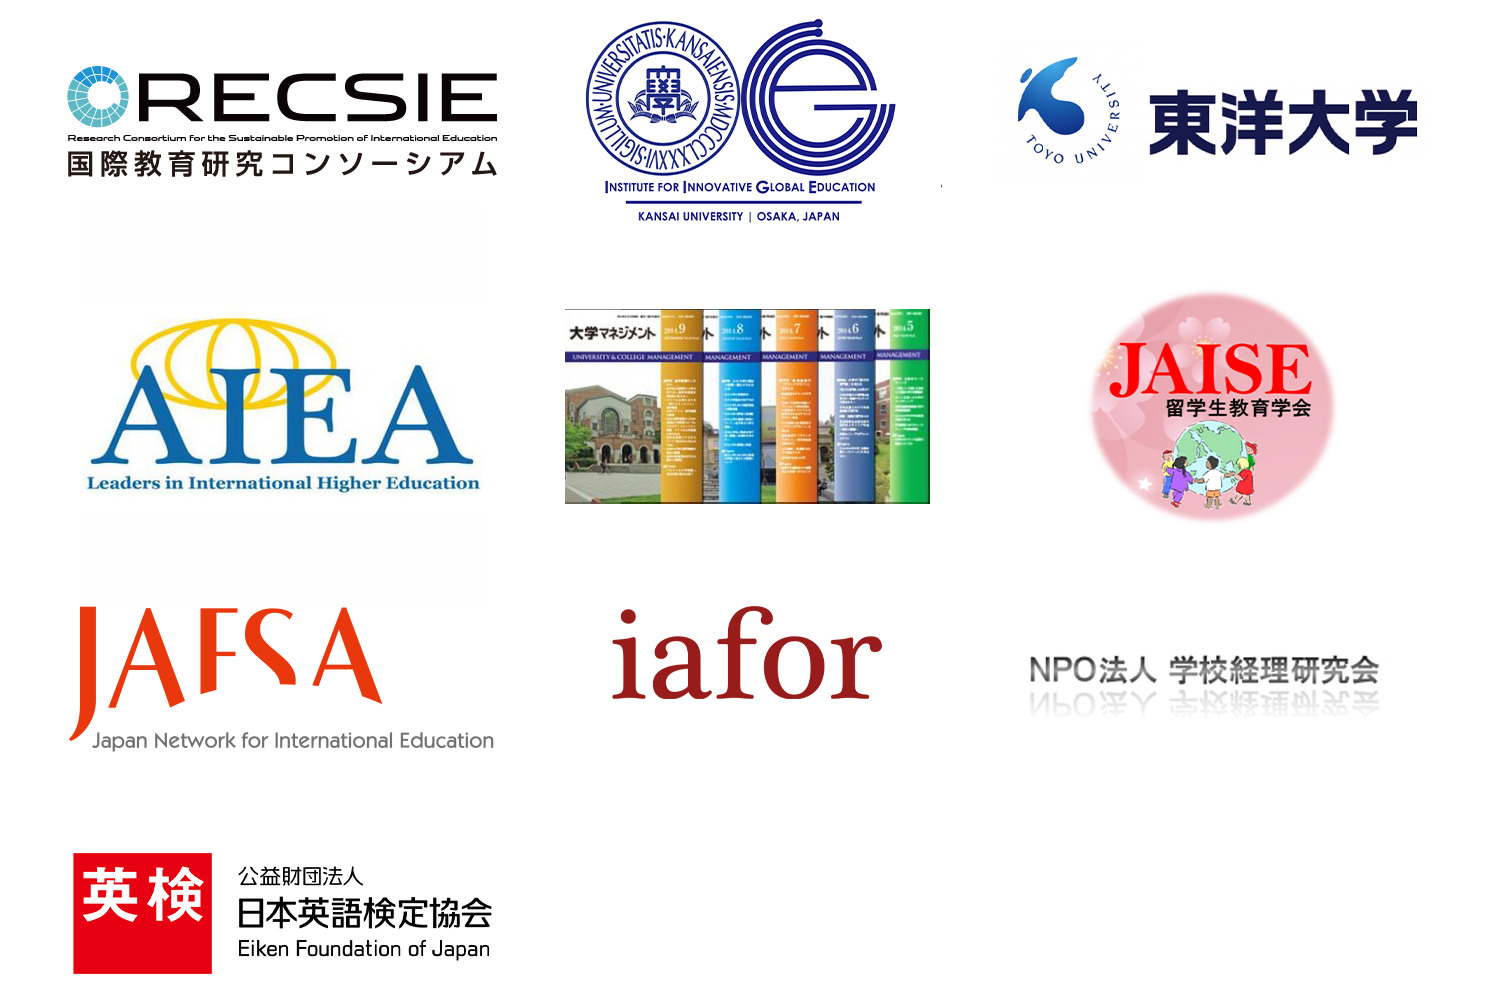 SIIEJ supporters include IIGE, Toyo University, AIEA, JAISE, JUAM, UMAP, JAFSA, Bridge Institute and Eiken